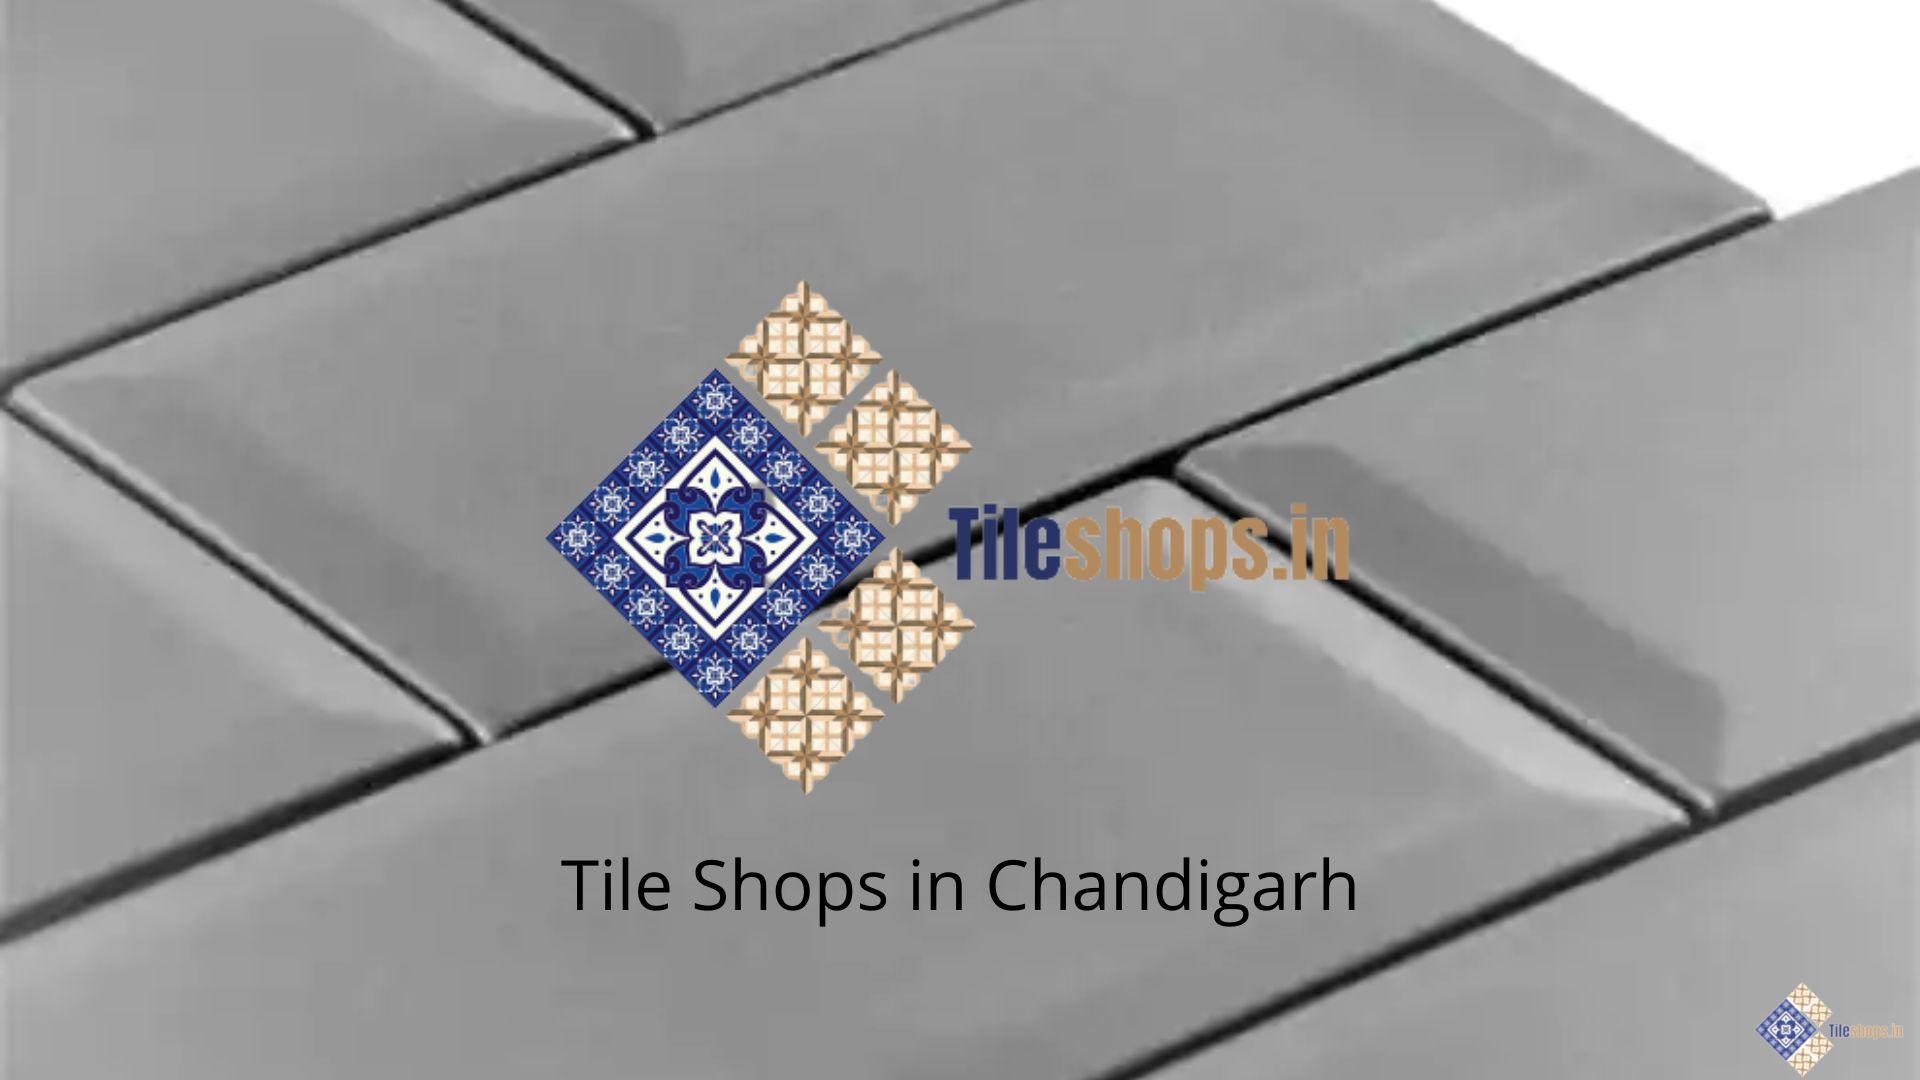 Tile Shops in Chandigarh